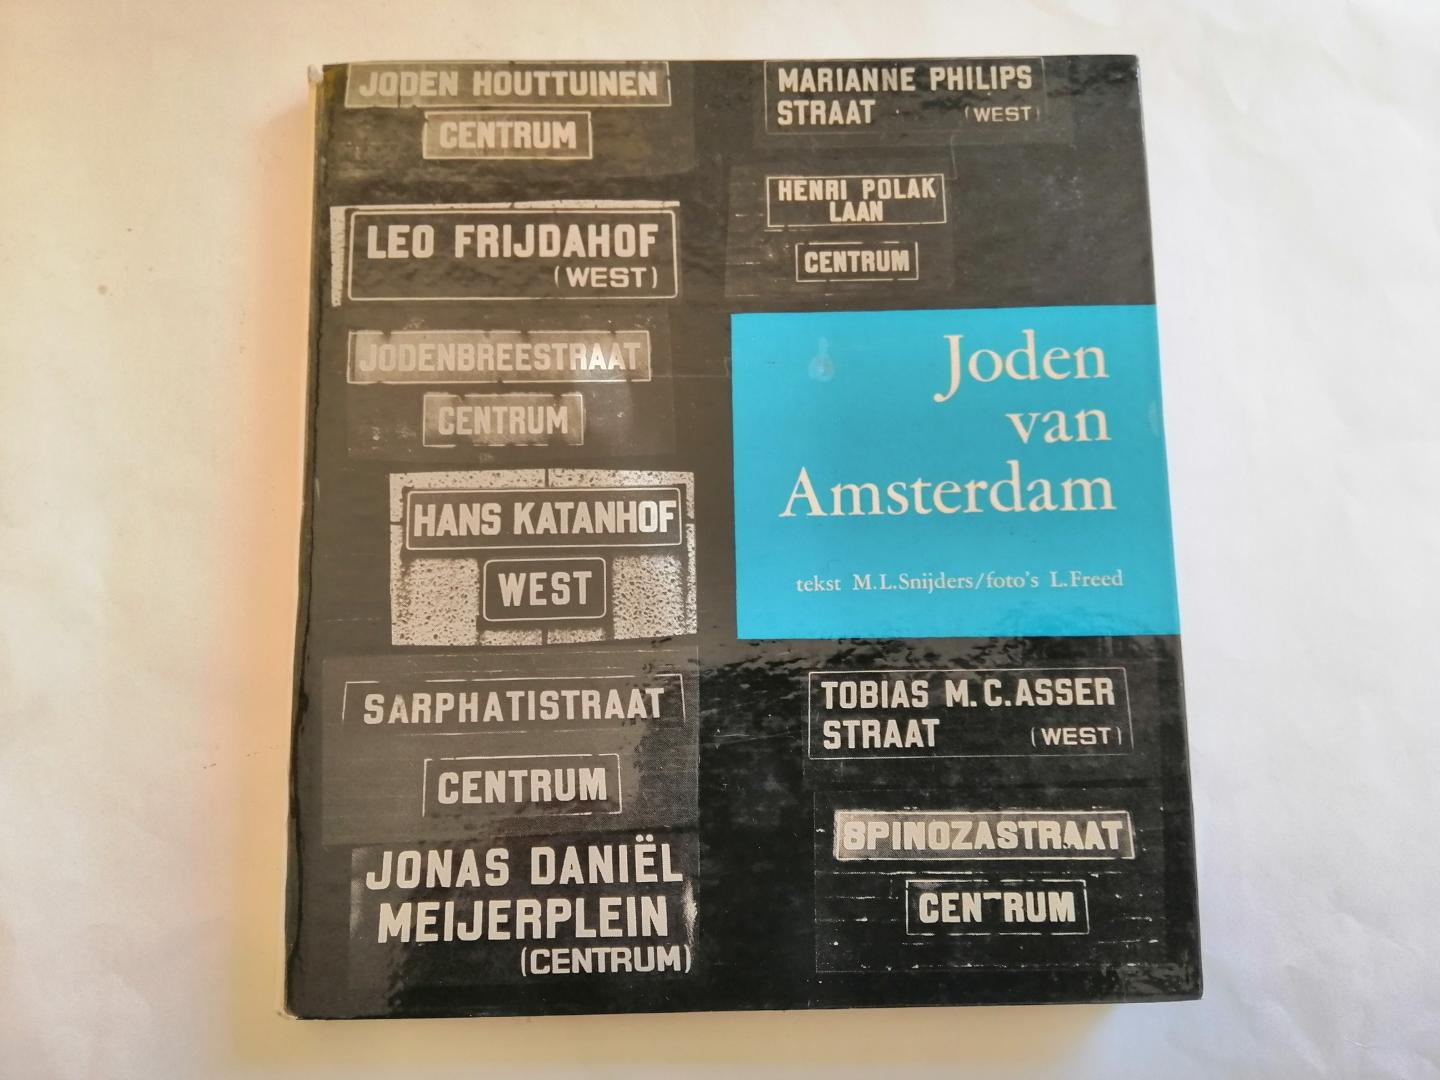 SNIJDERS, M.L. foto's van FREED, LEONARD - - Joden van Amsterdam.